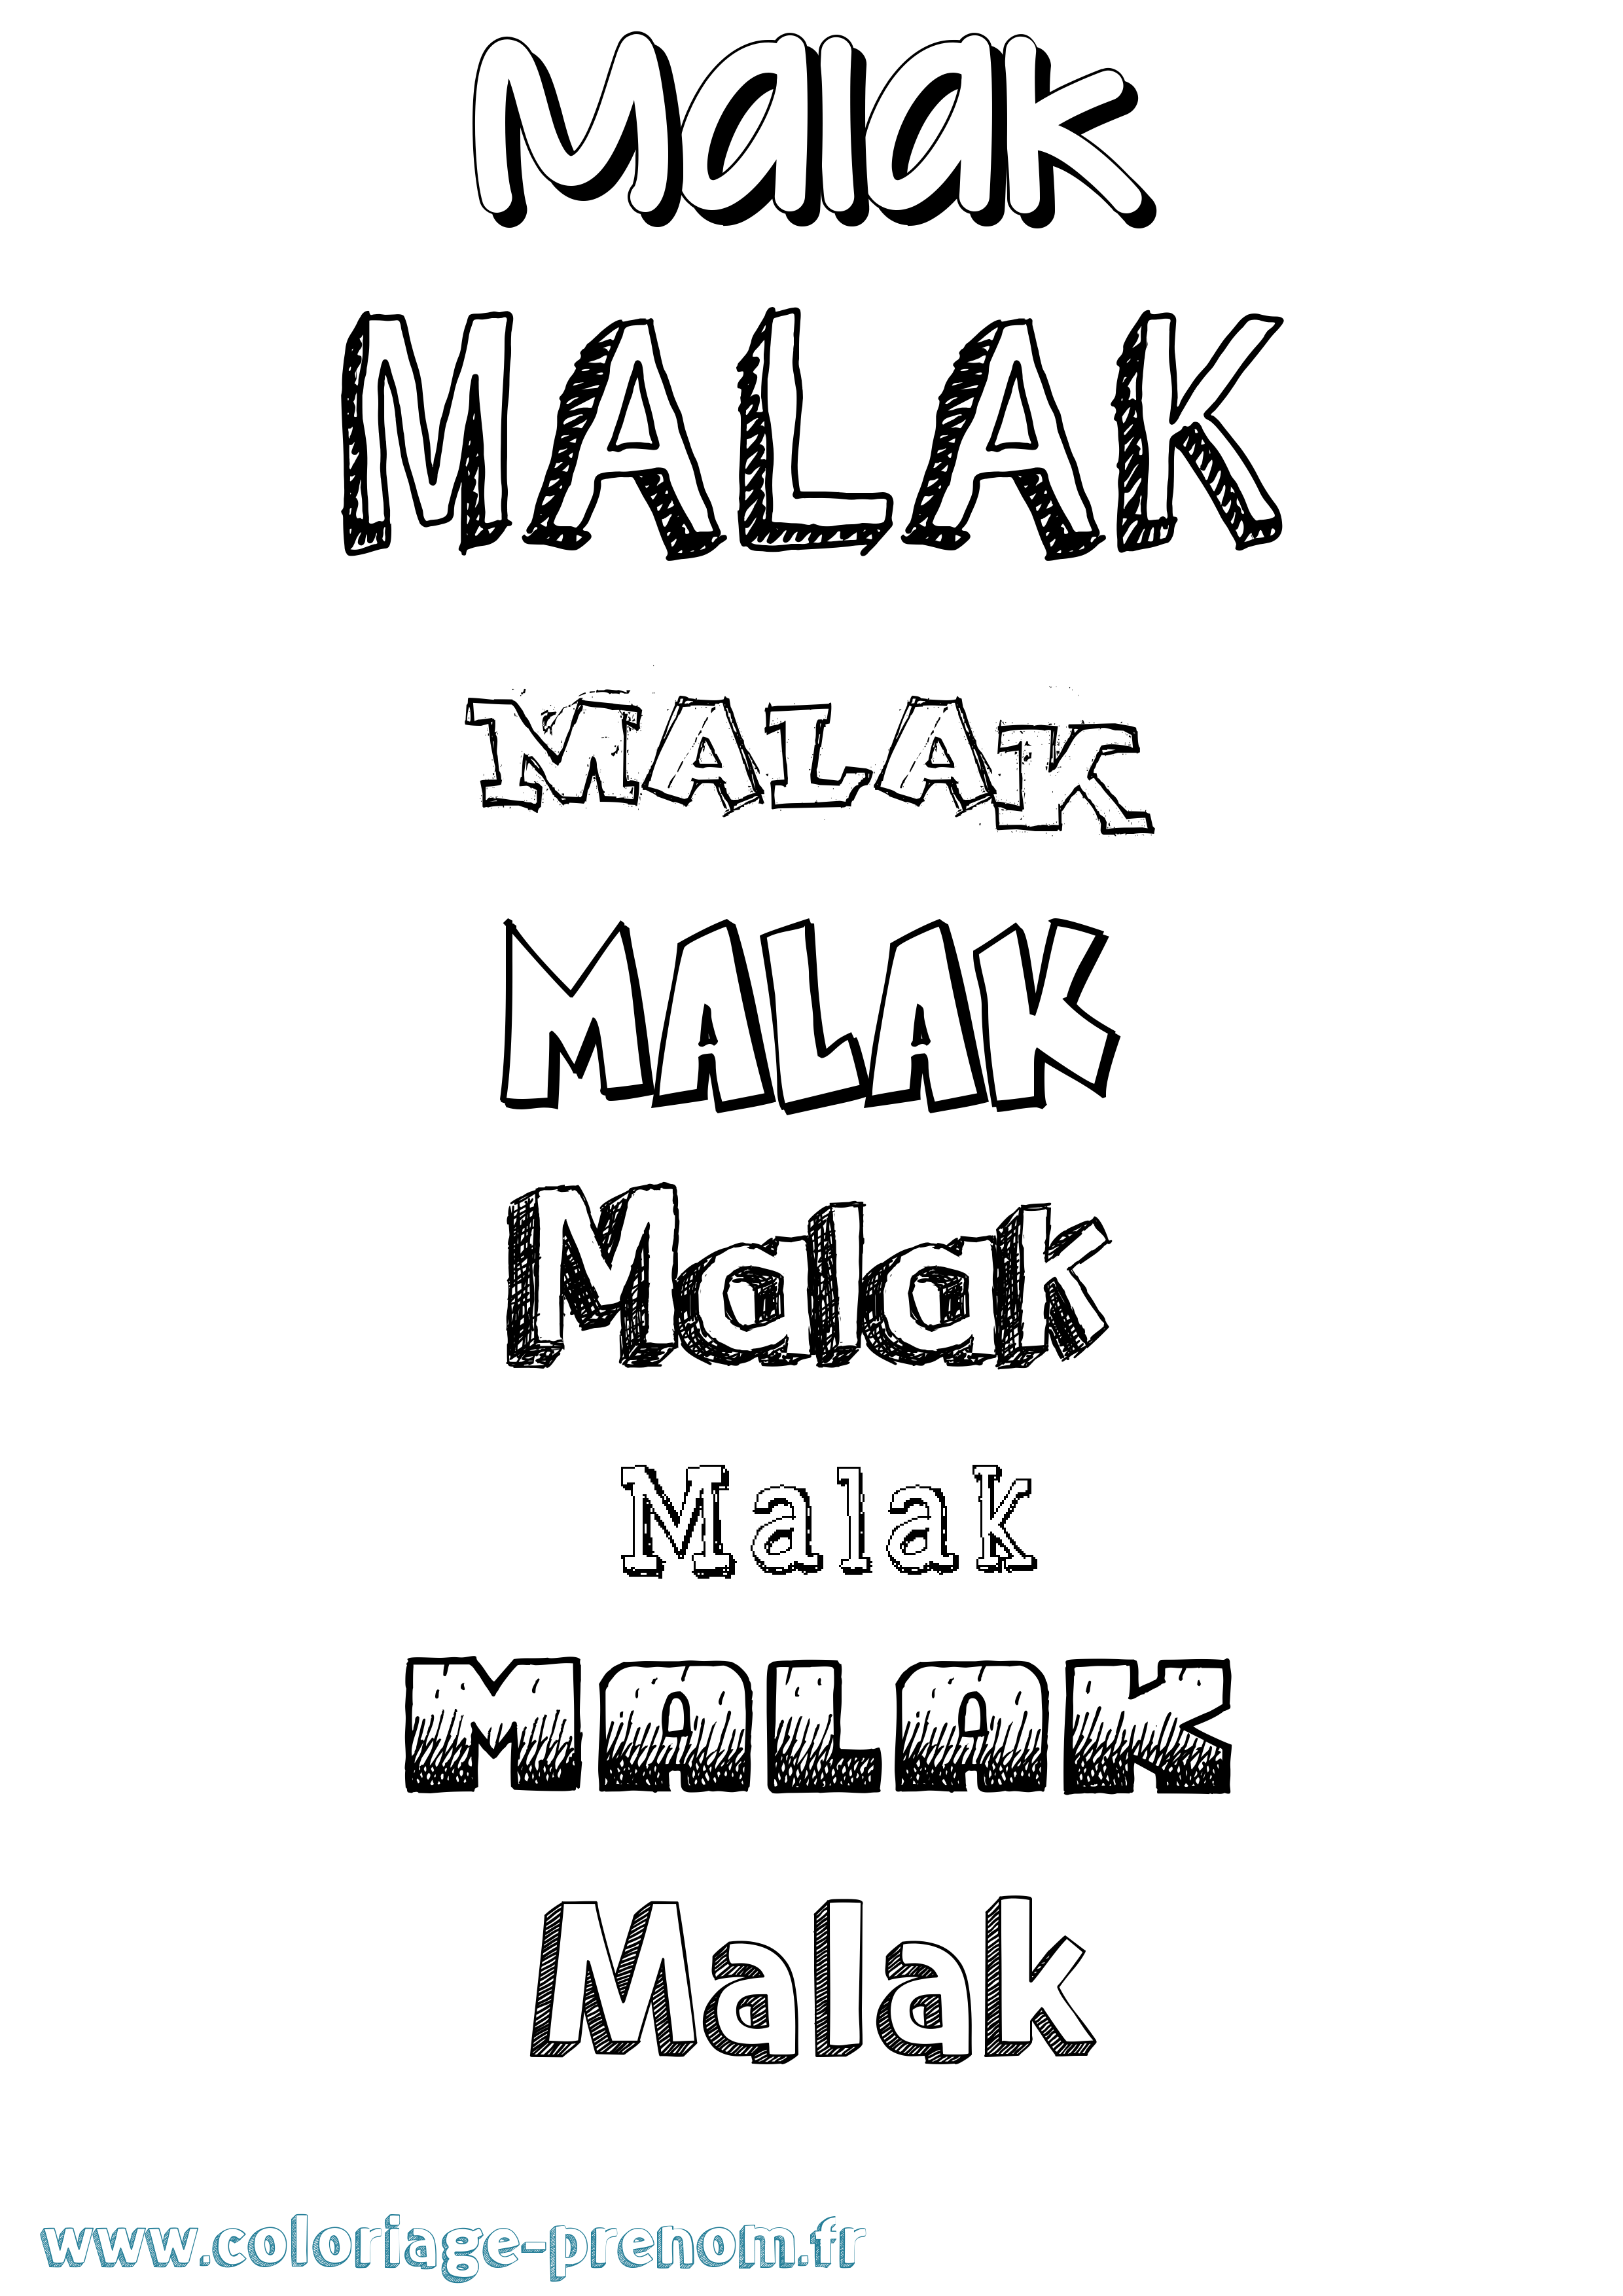 Coloriage prénom Malak Dessiné